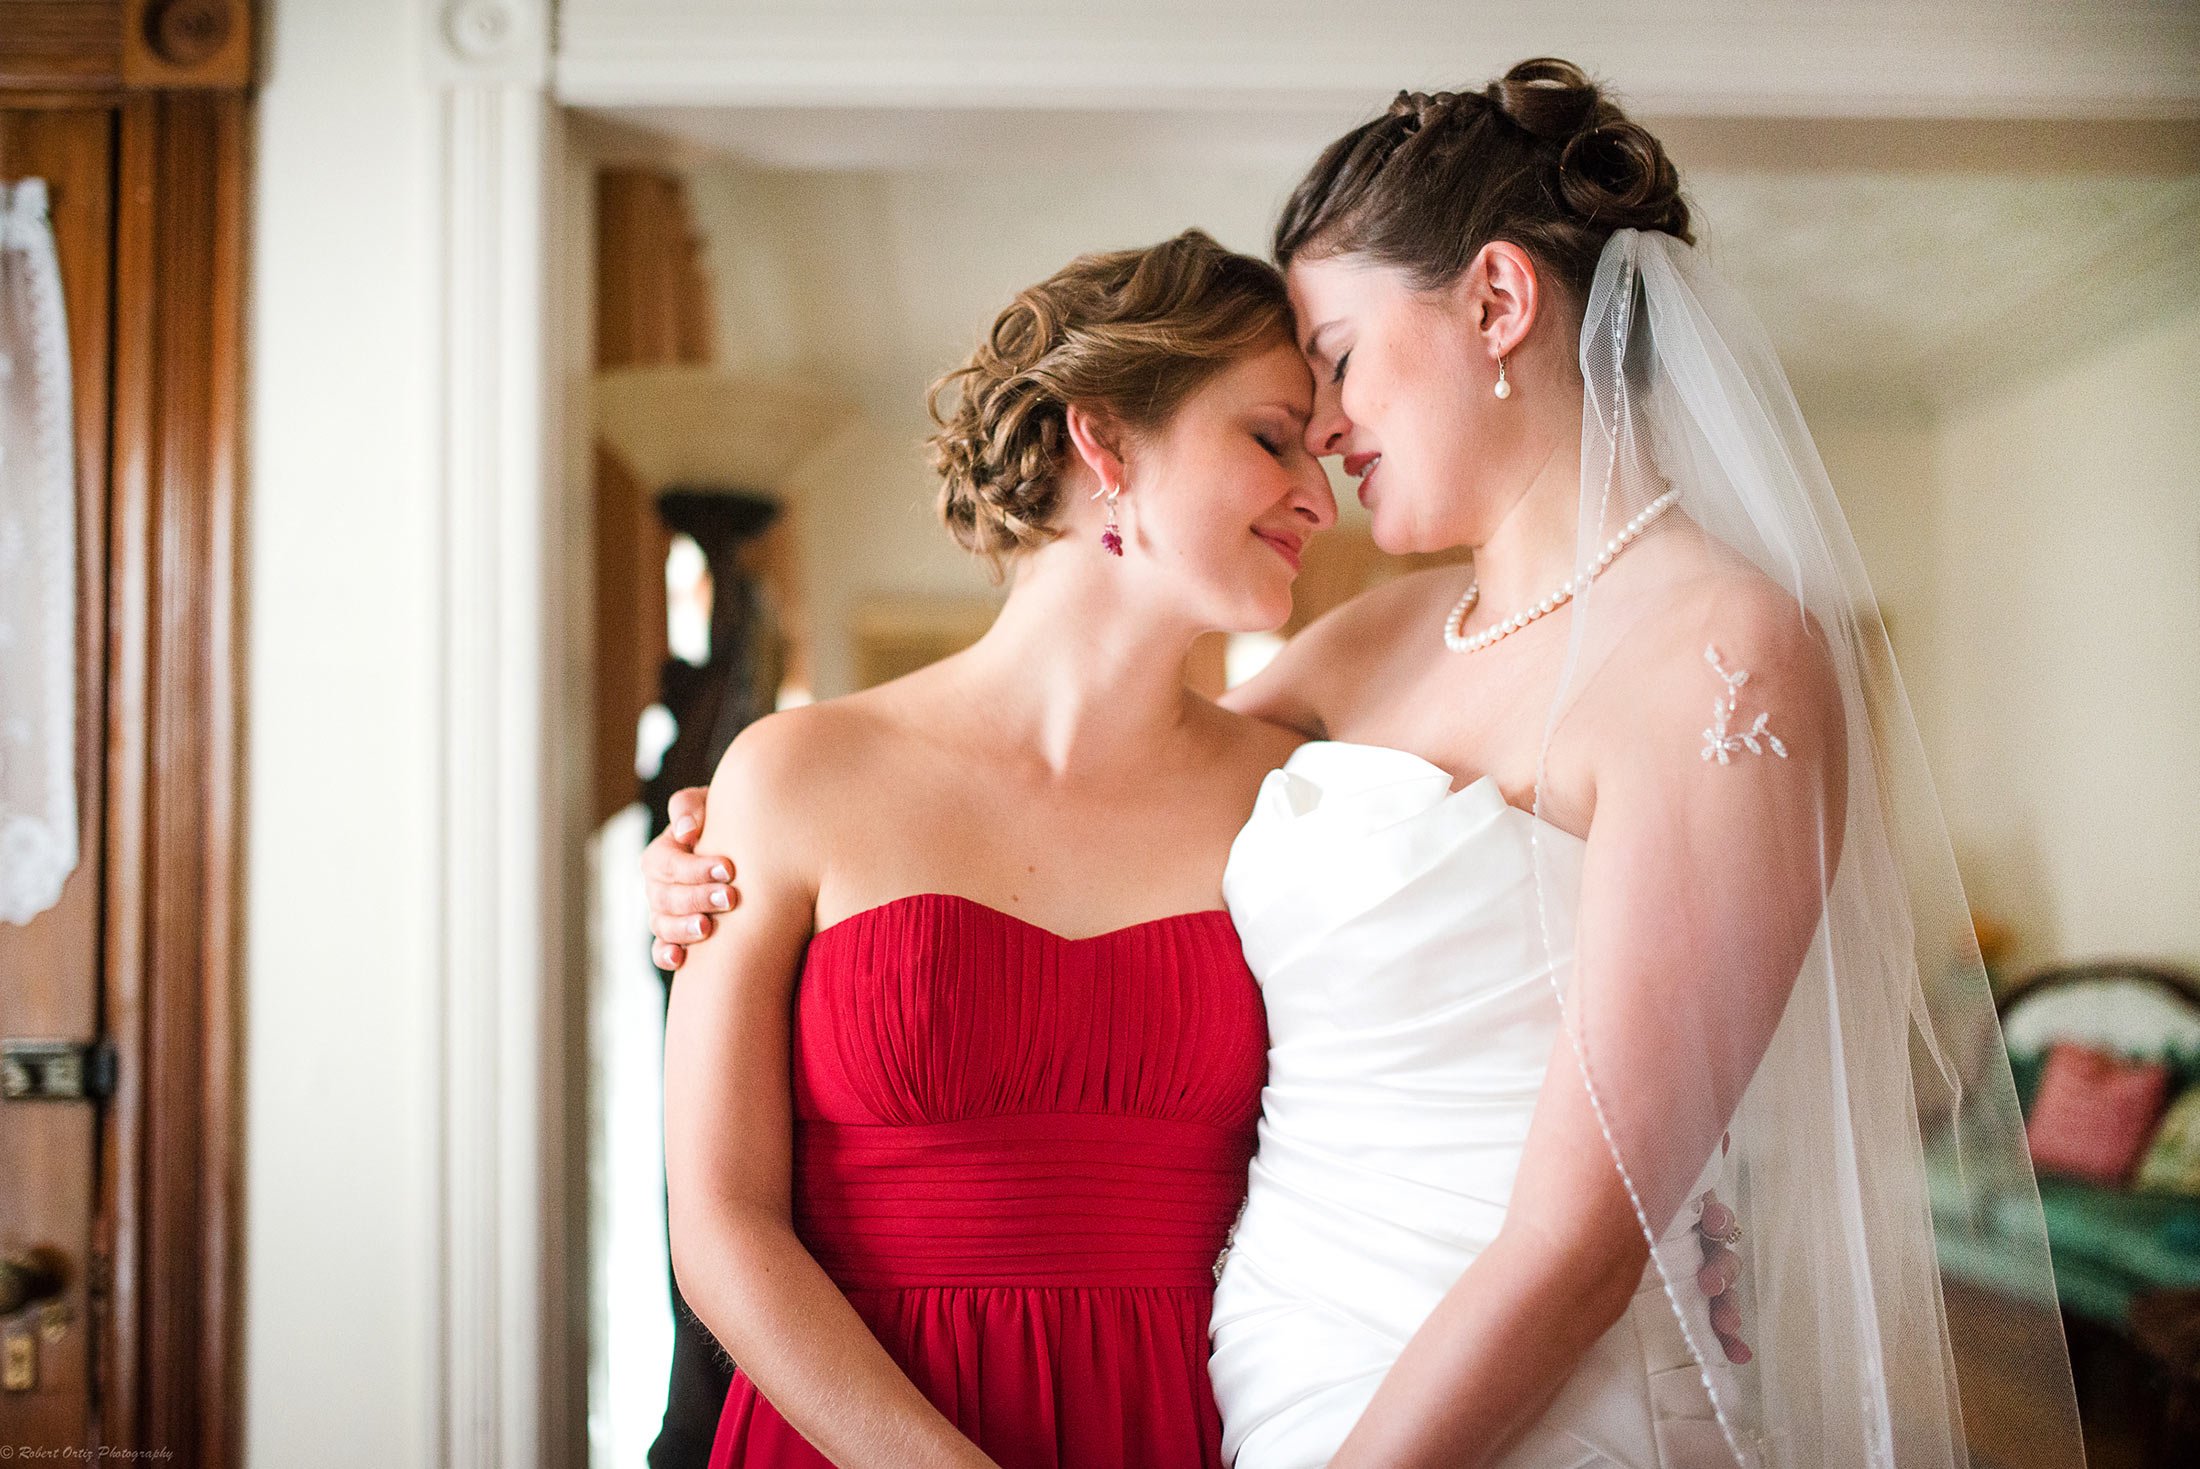 Bride and sister wedding moment |Robert Ortiz Photography (Copy)